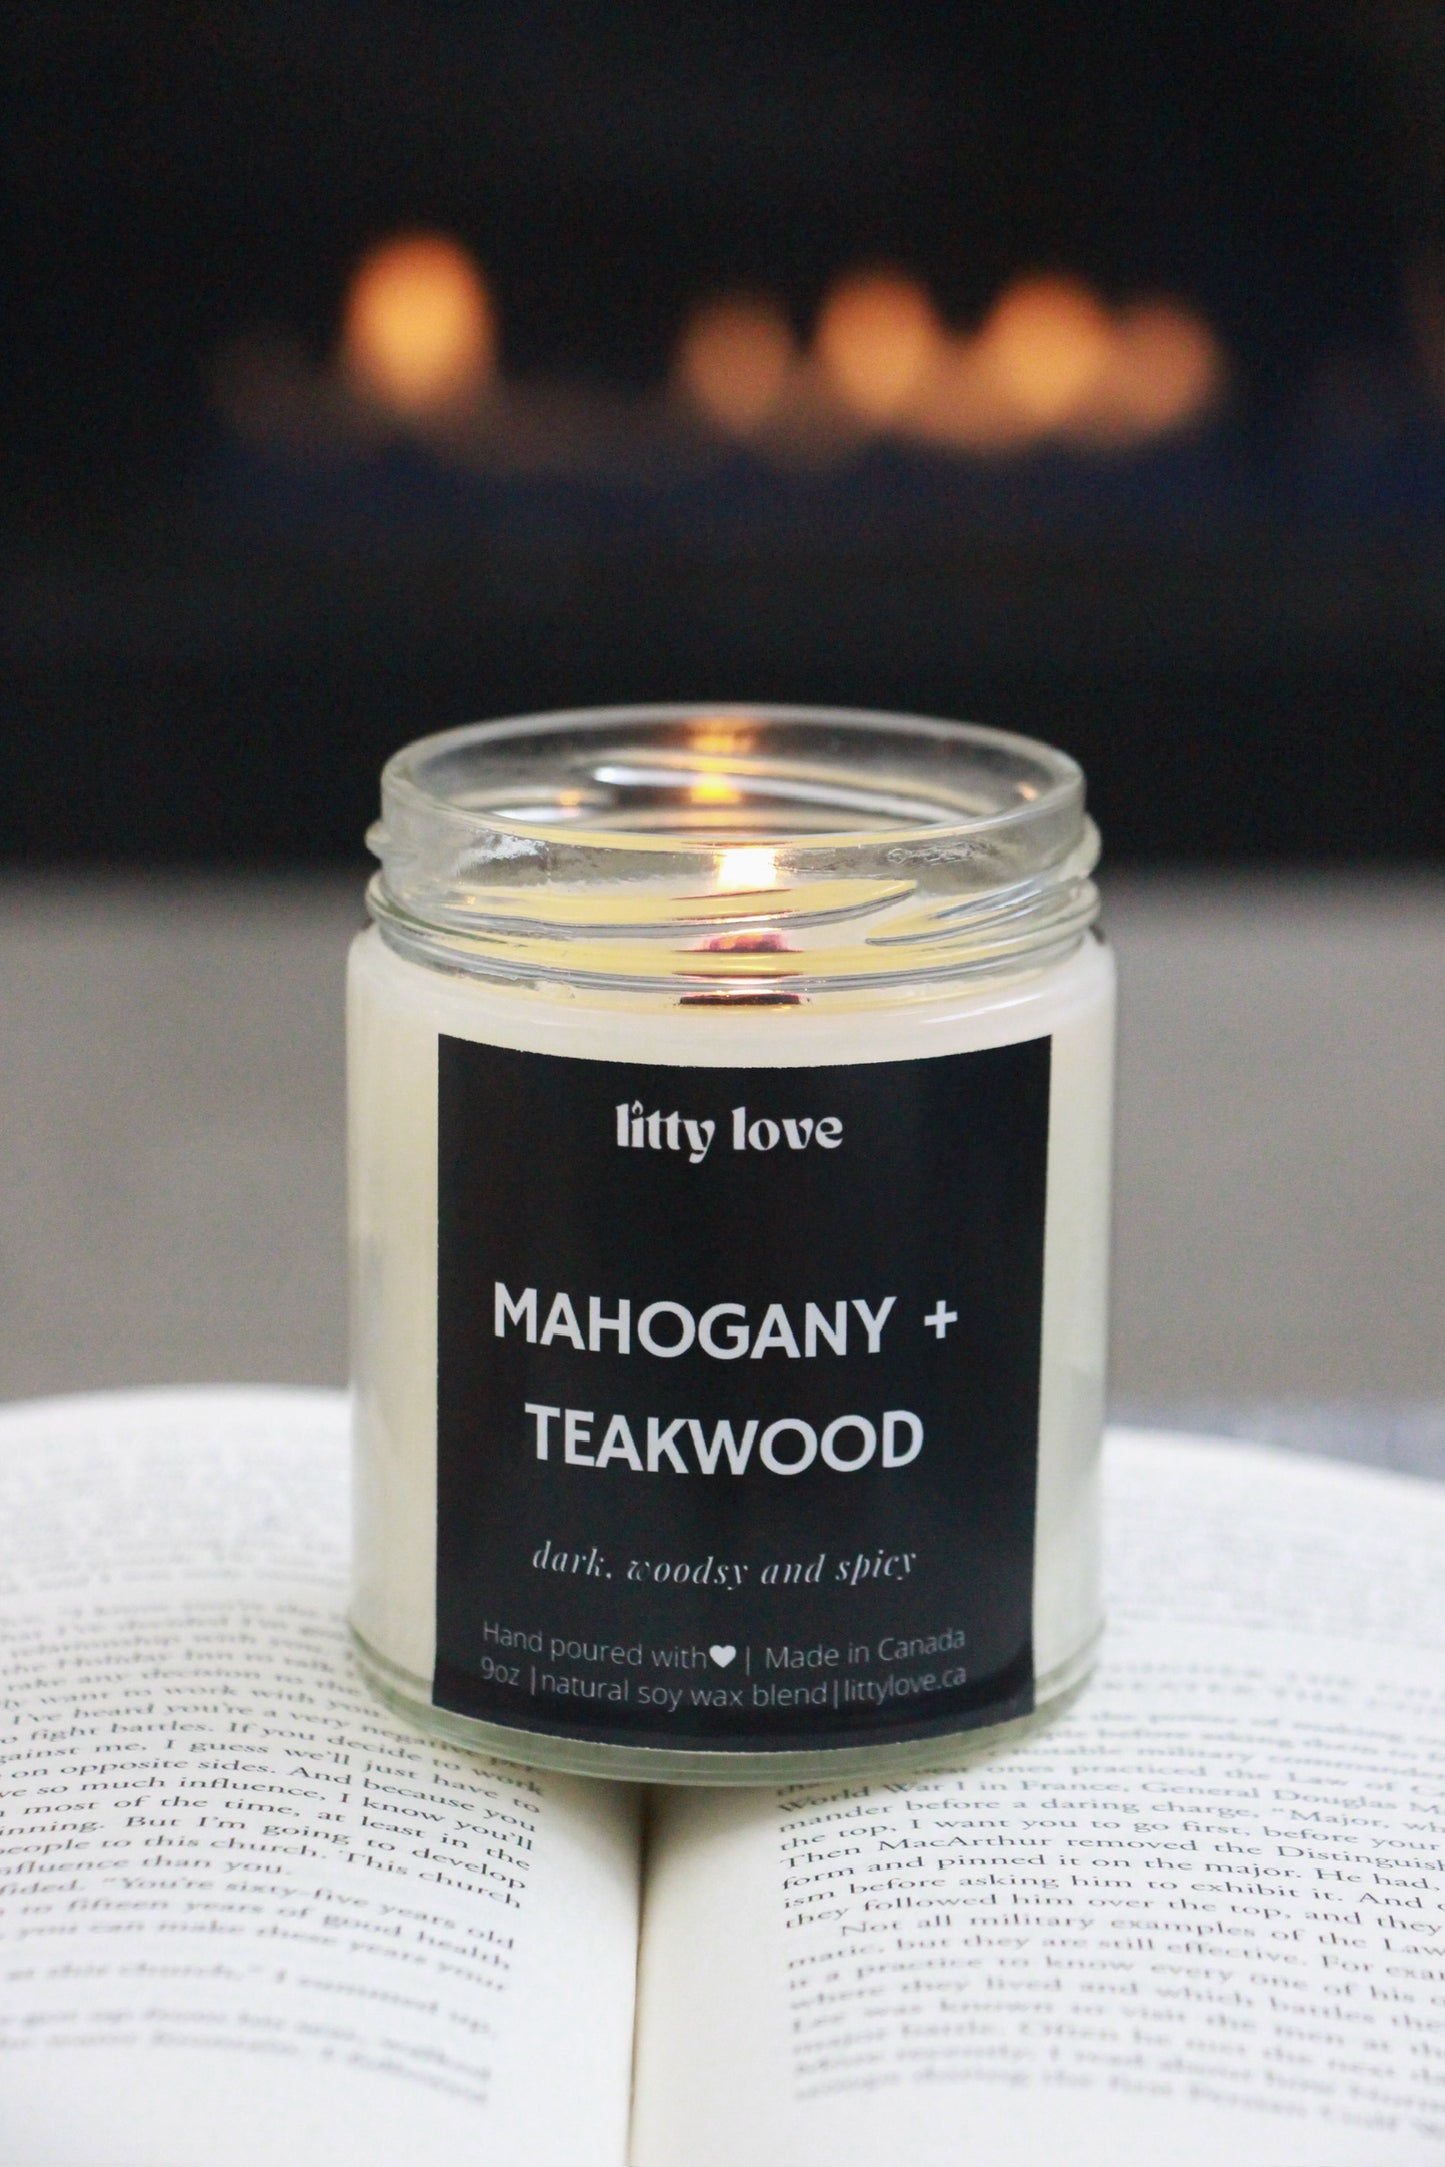 Mahogany & teakwood